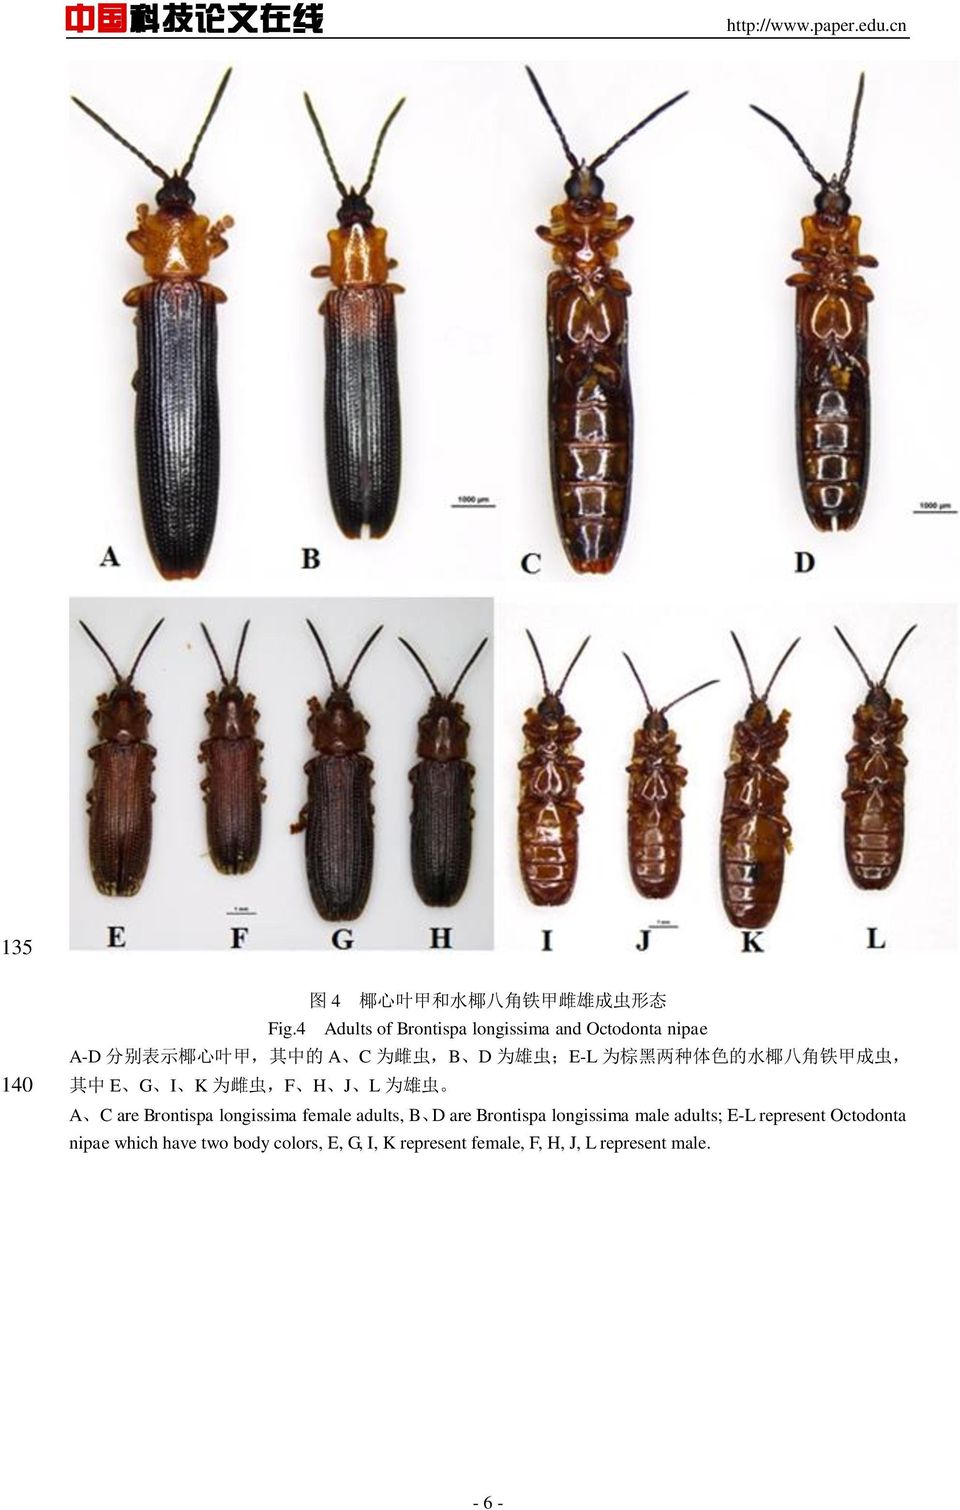 棕 黑 两 种 体 色 的 水 椰 八 角 铁 甲 成 虫, 其 中 E G I K 为 雌 虫,F H J L 为 雄 虫 A C are Brontispa longissima female adults,